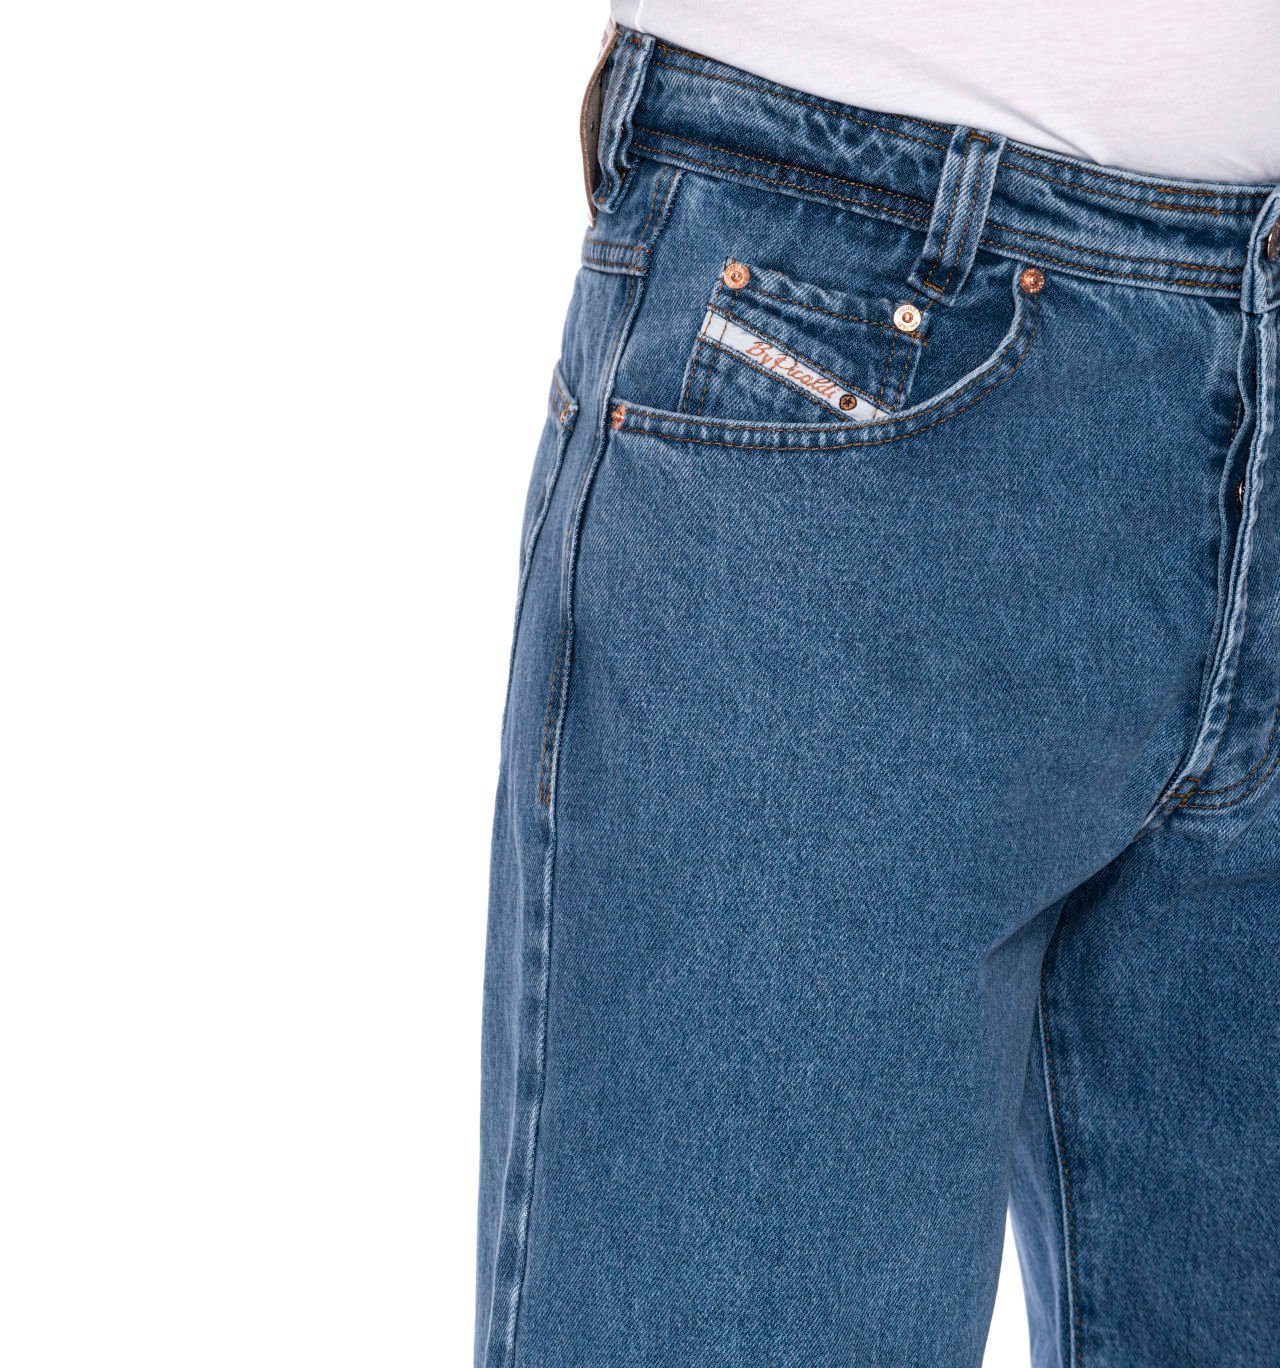 Jeans Loose Zicco 471 PICALDI Detroit Pocket Five Fit, Jeans Jeans Weite